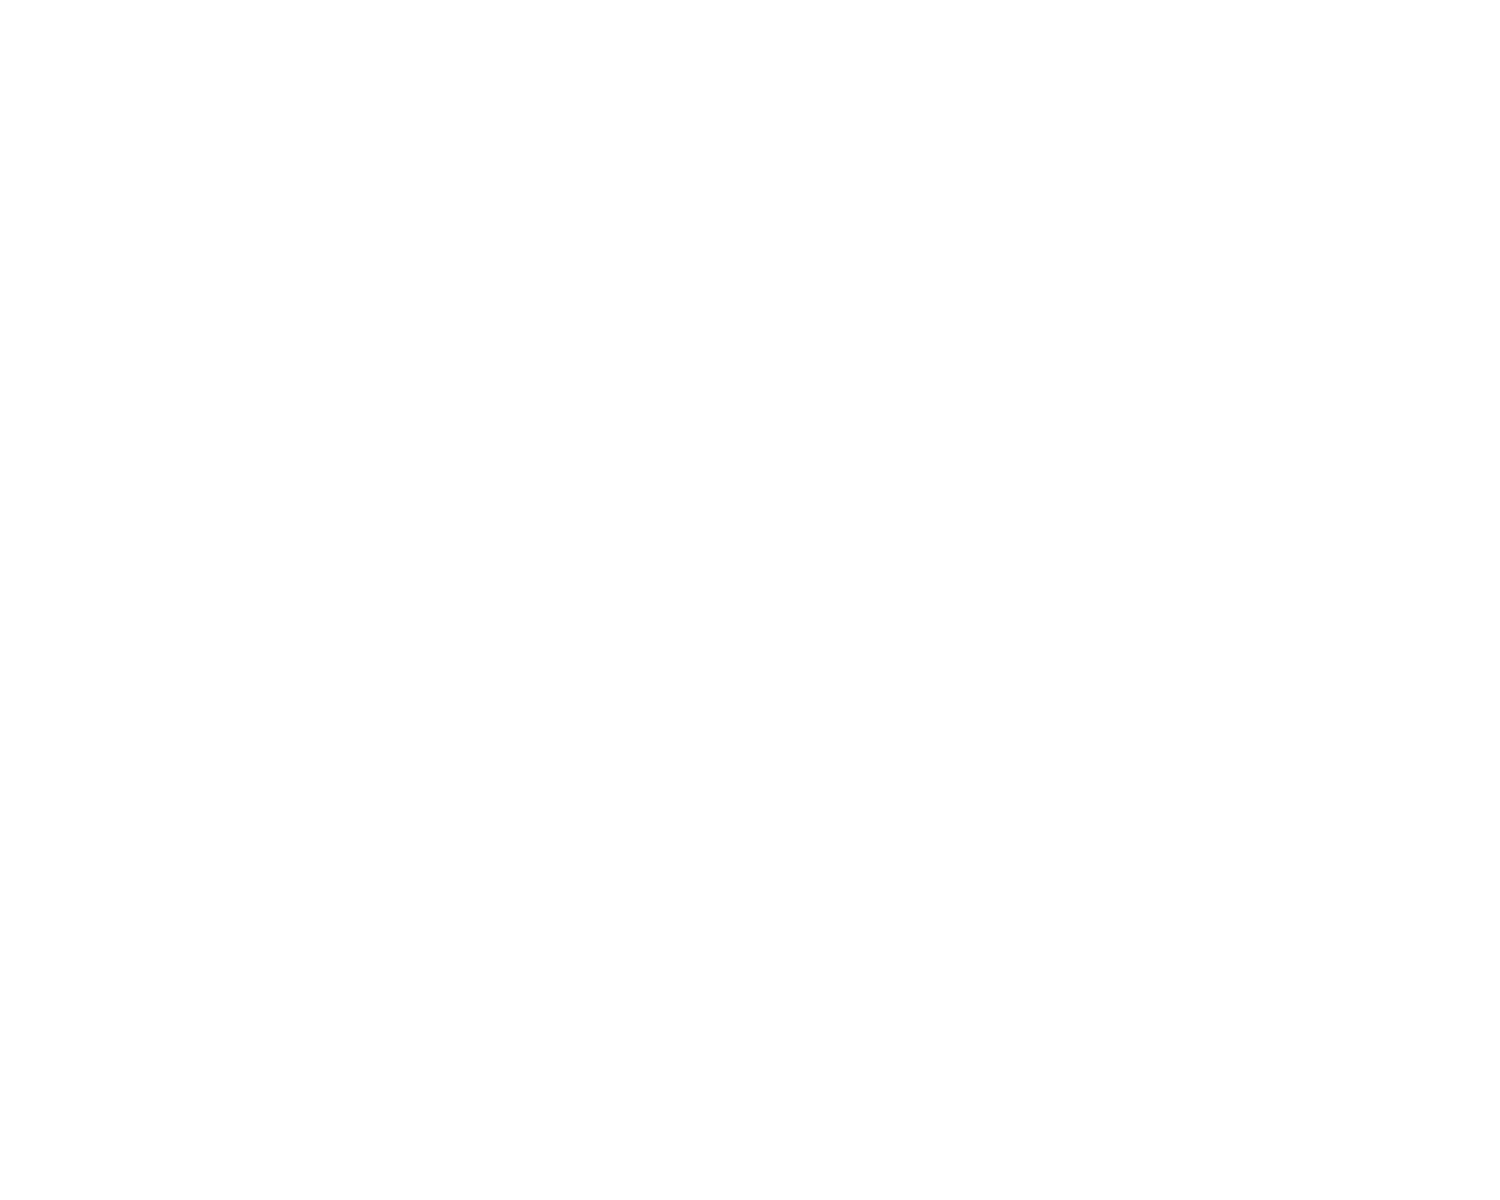 The Restaurant at Zero George